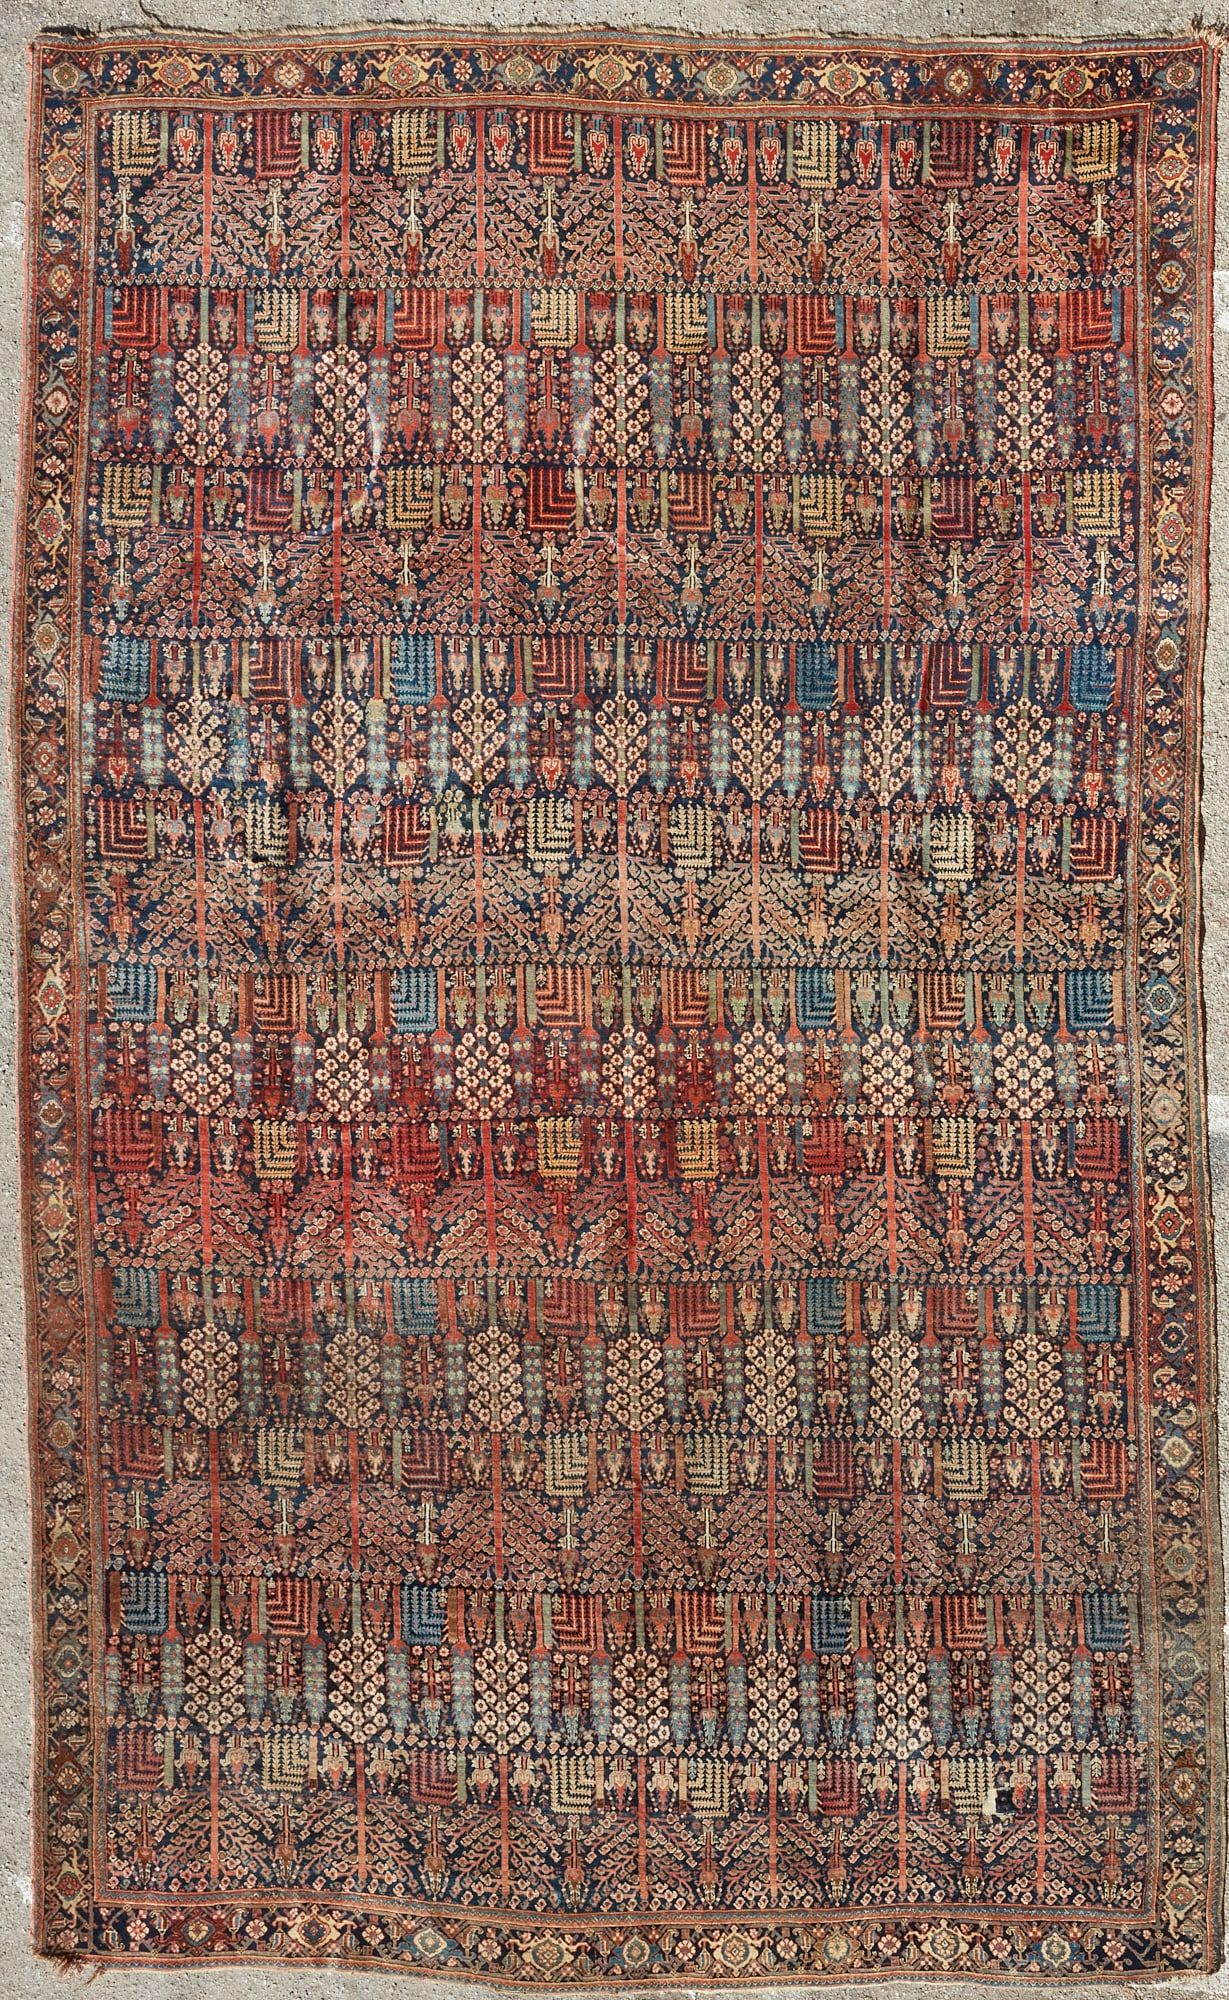 A PERSIAN CARPETA Persian carpetdimensions 2fb33d1